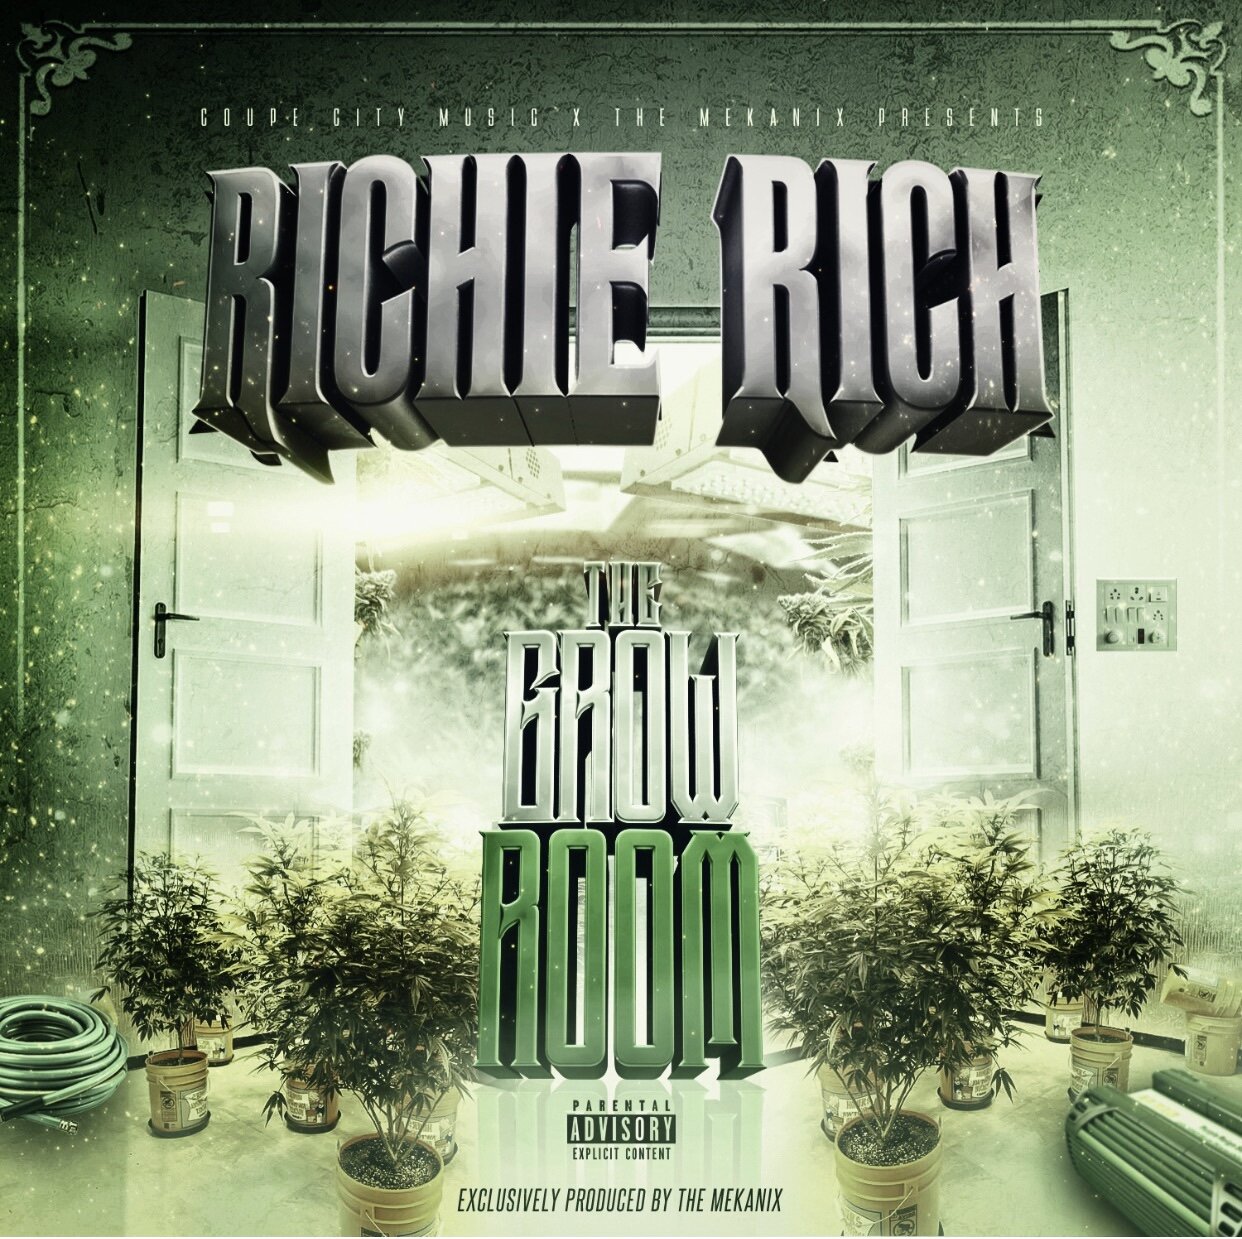 Richie Richie - The Grow Room